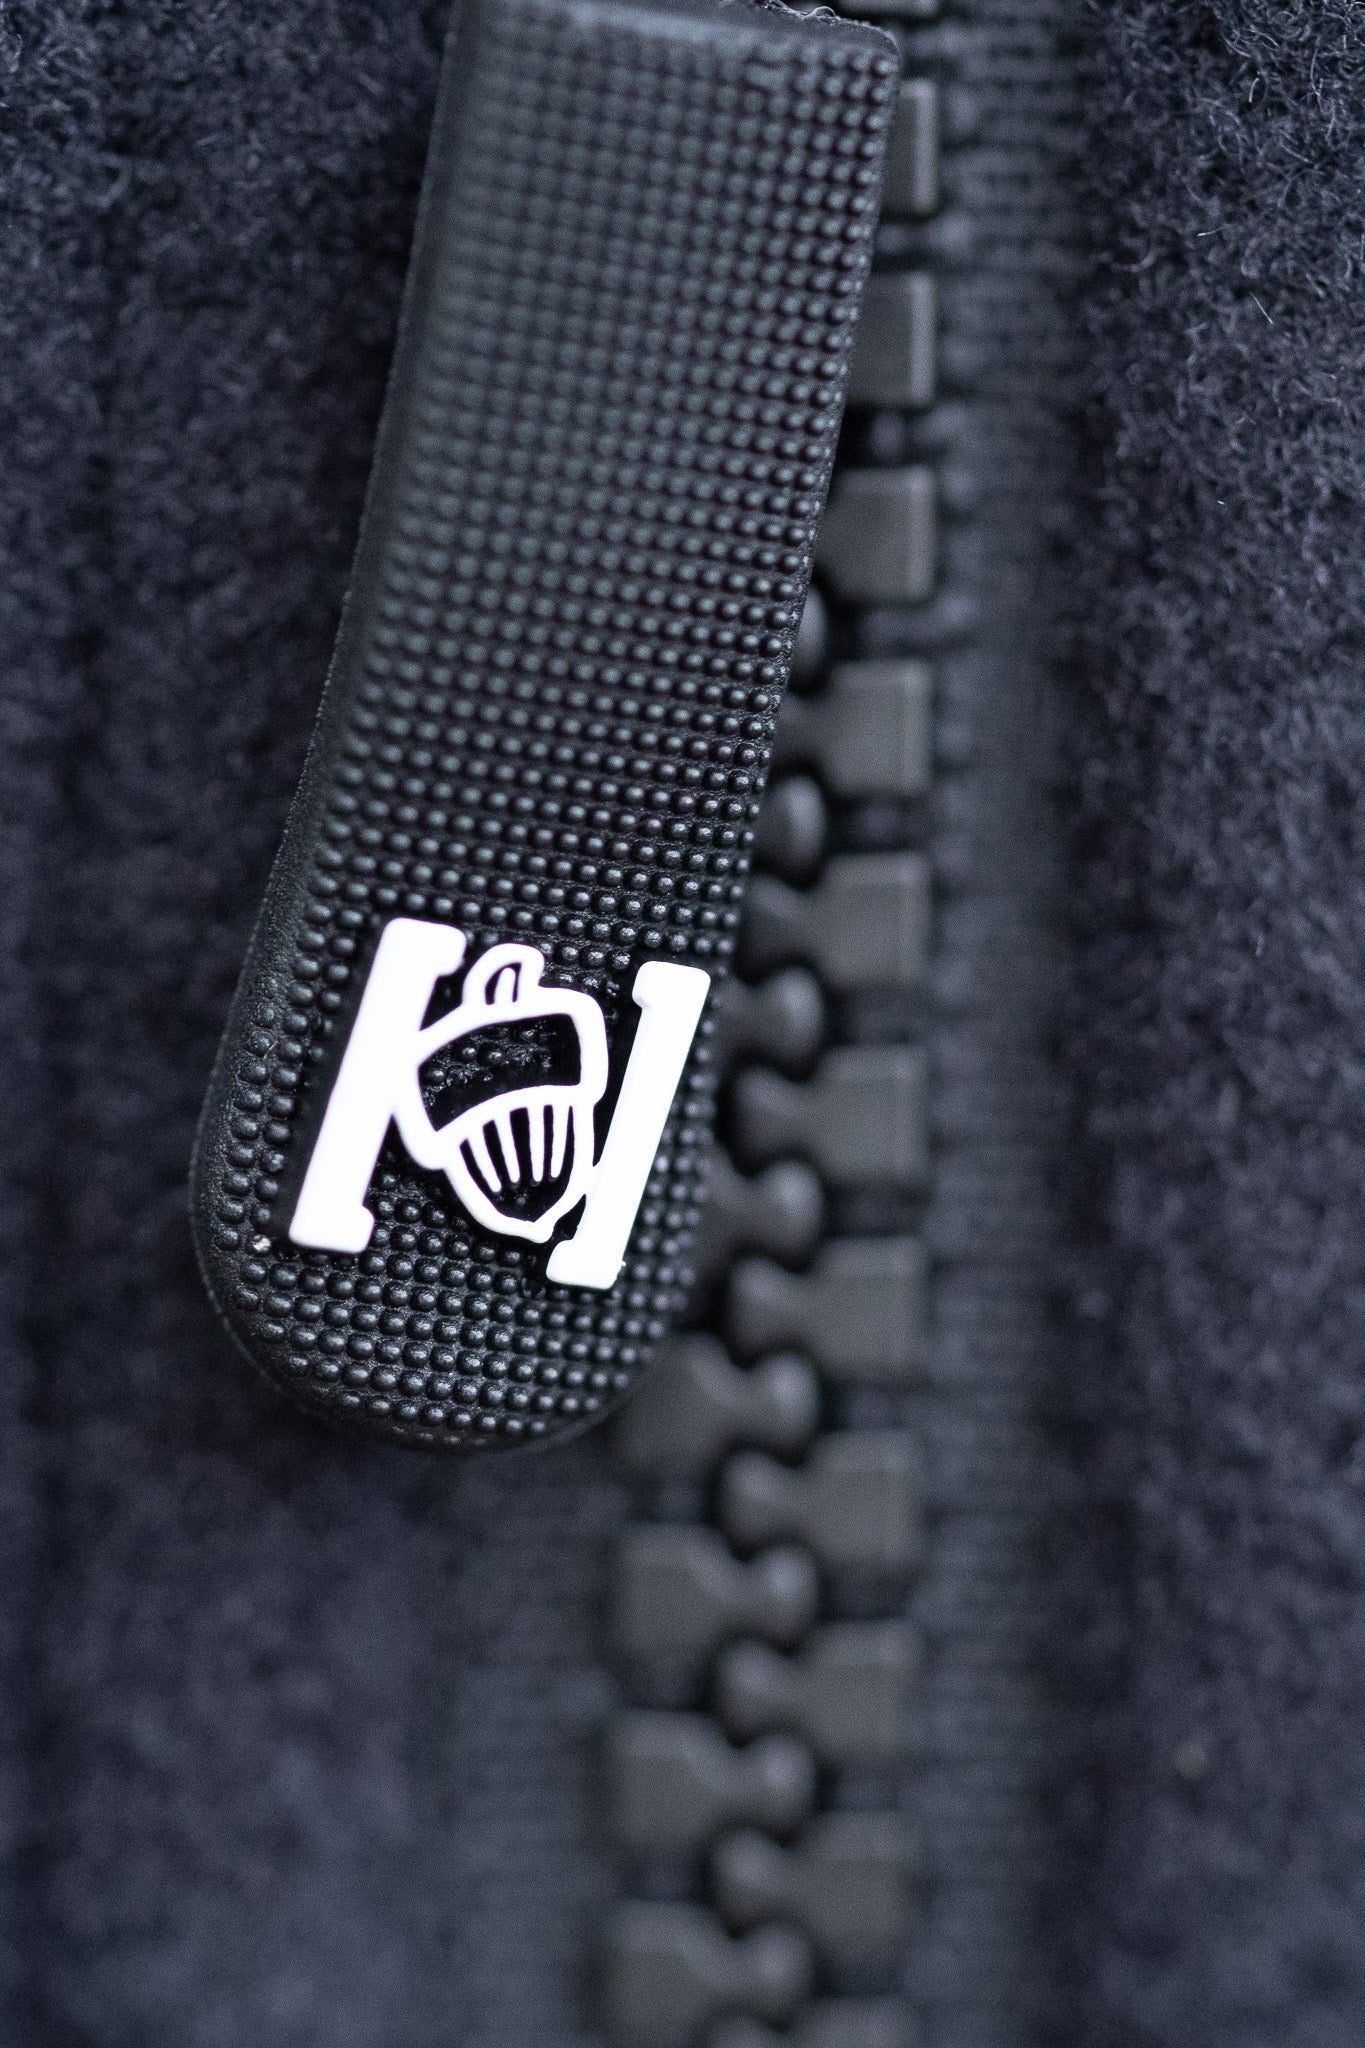 Skwerel Logo Nuss on Zipper